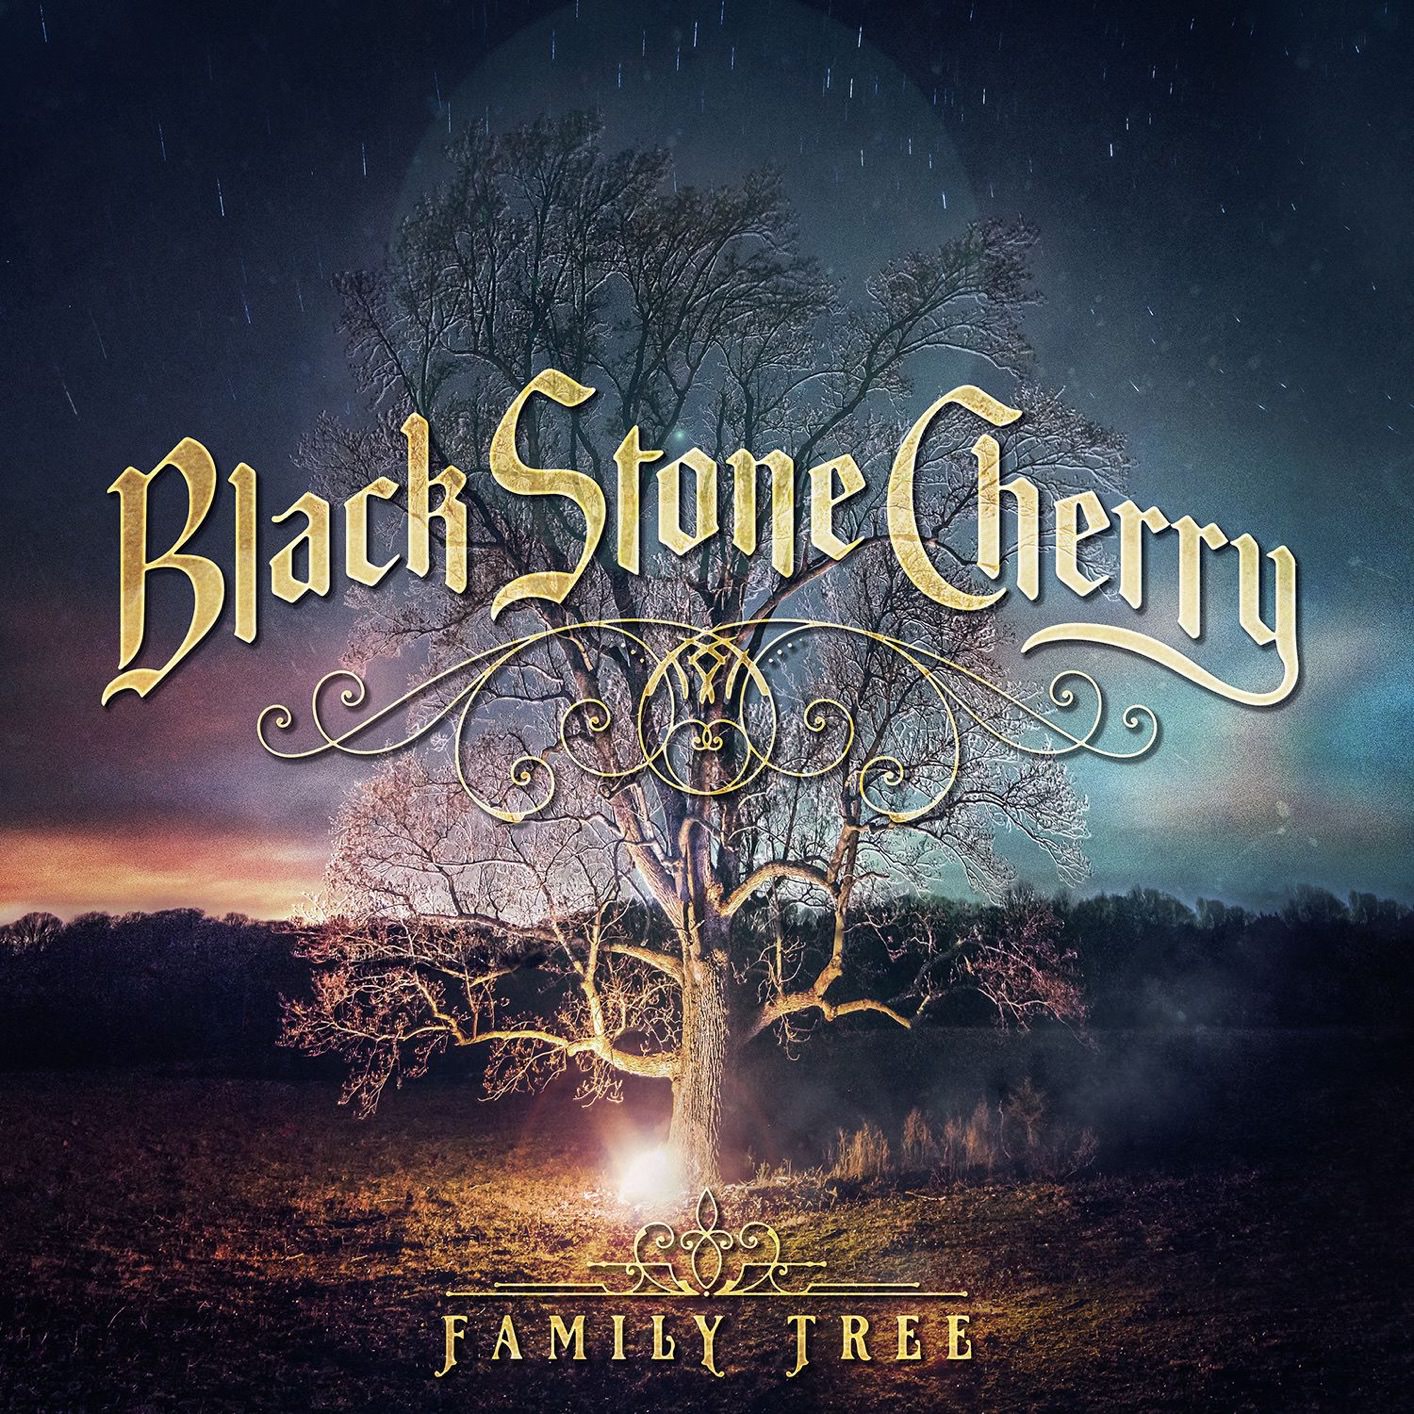 Black Stone Cherry - Family Tree (2018) [Qobuz FLAC 24bit/48kHz]